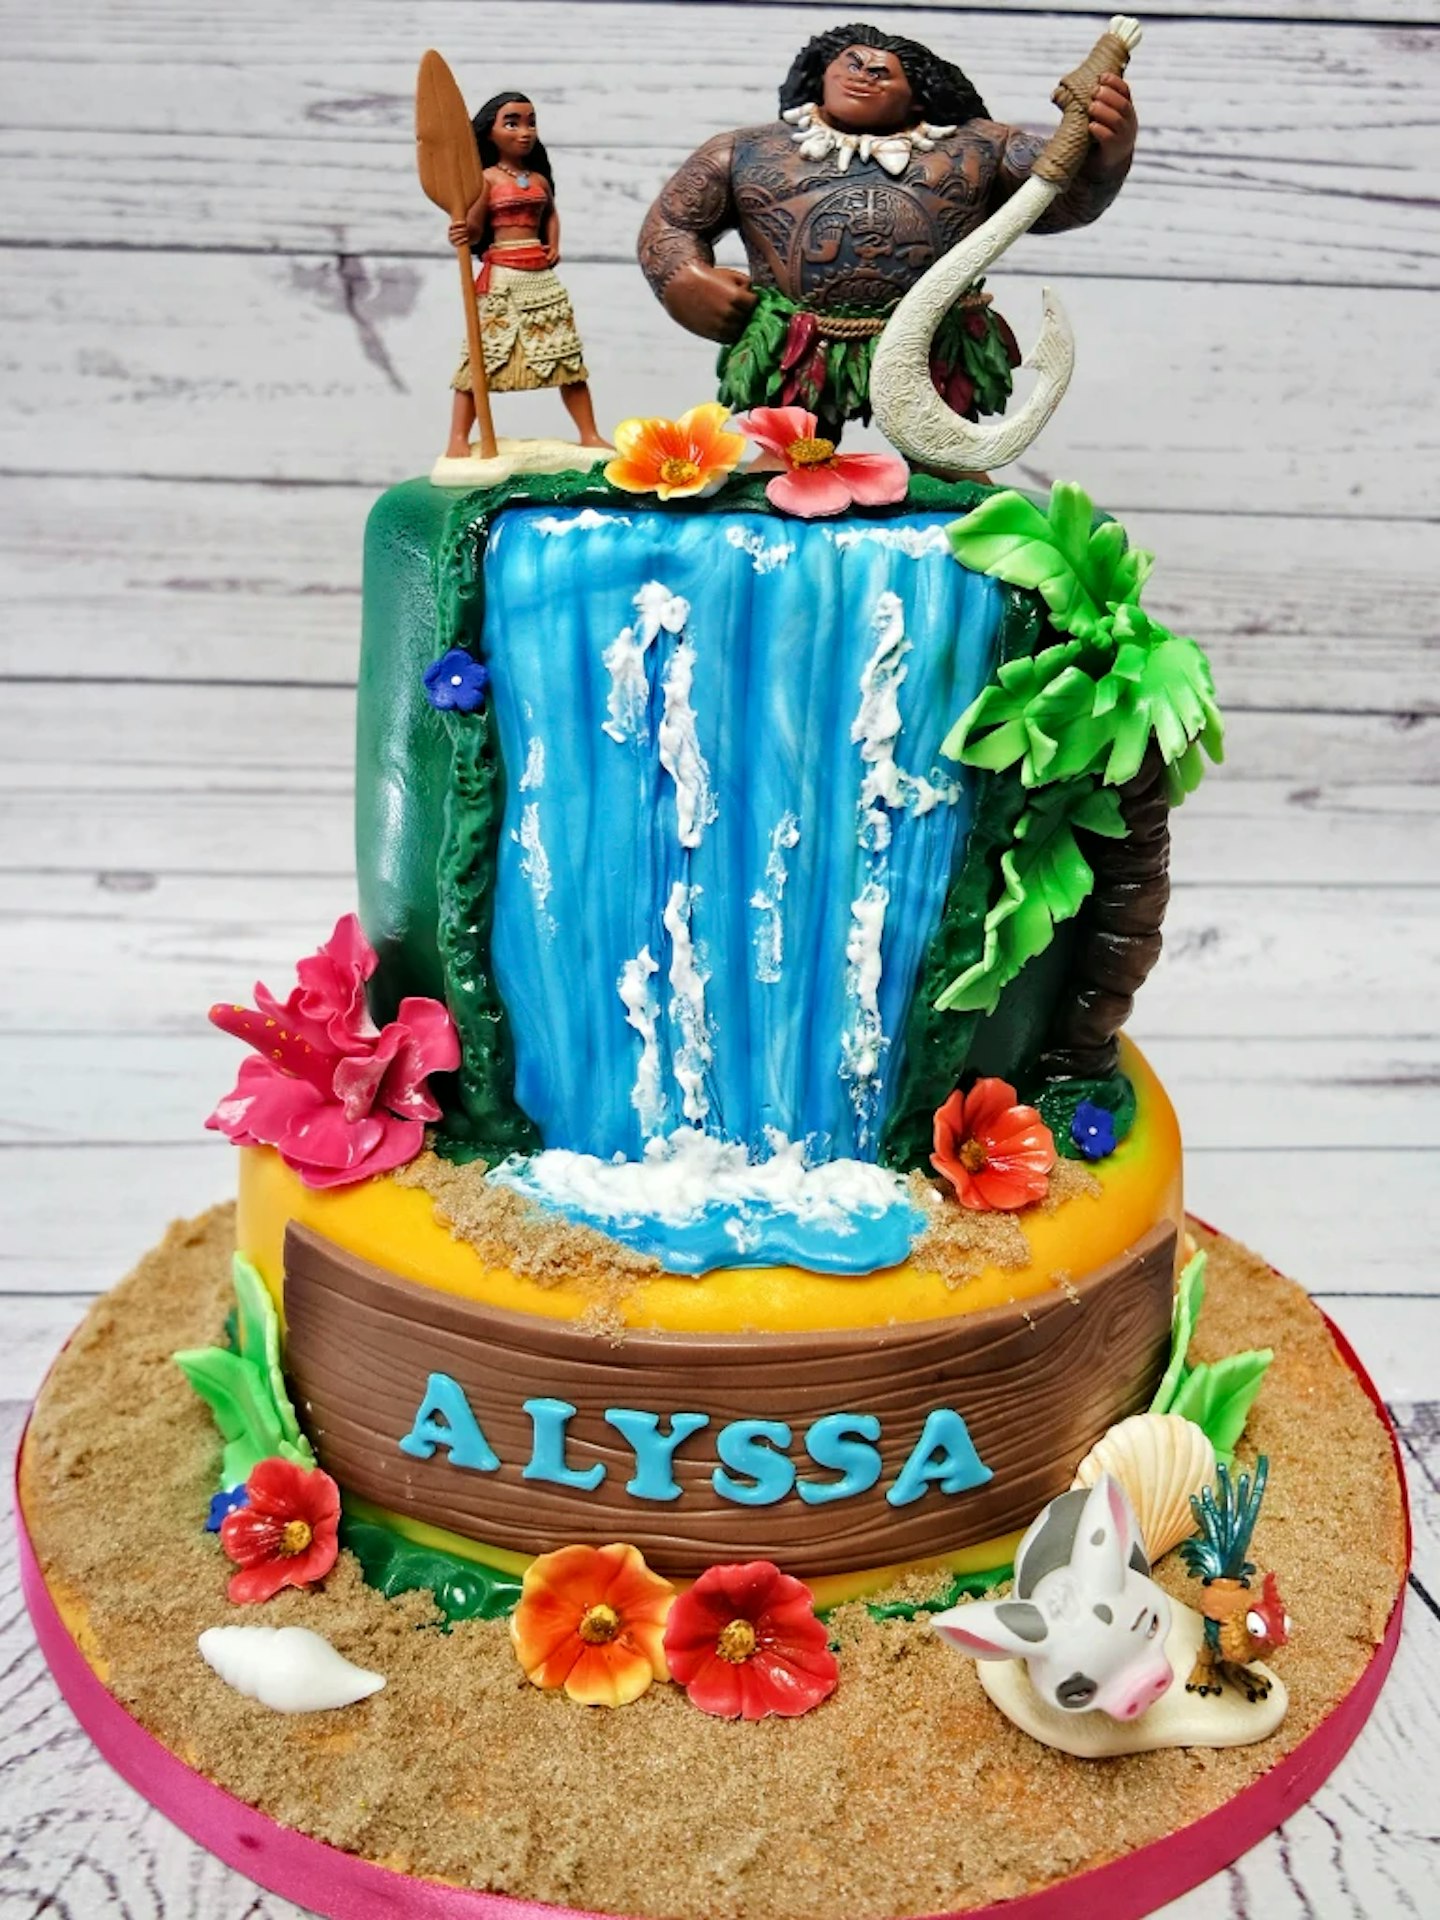 Moana crafty birthday cake 